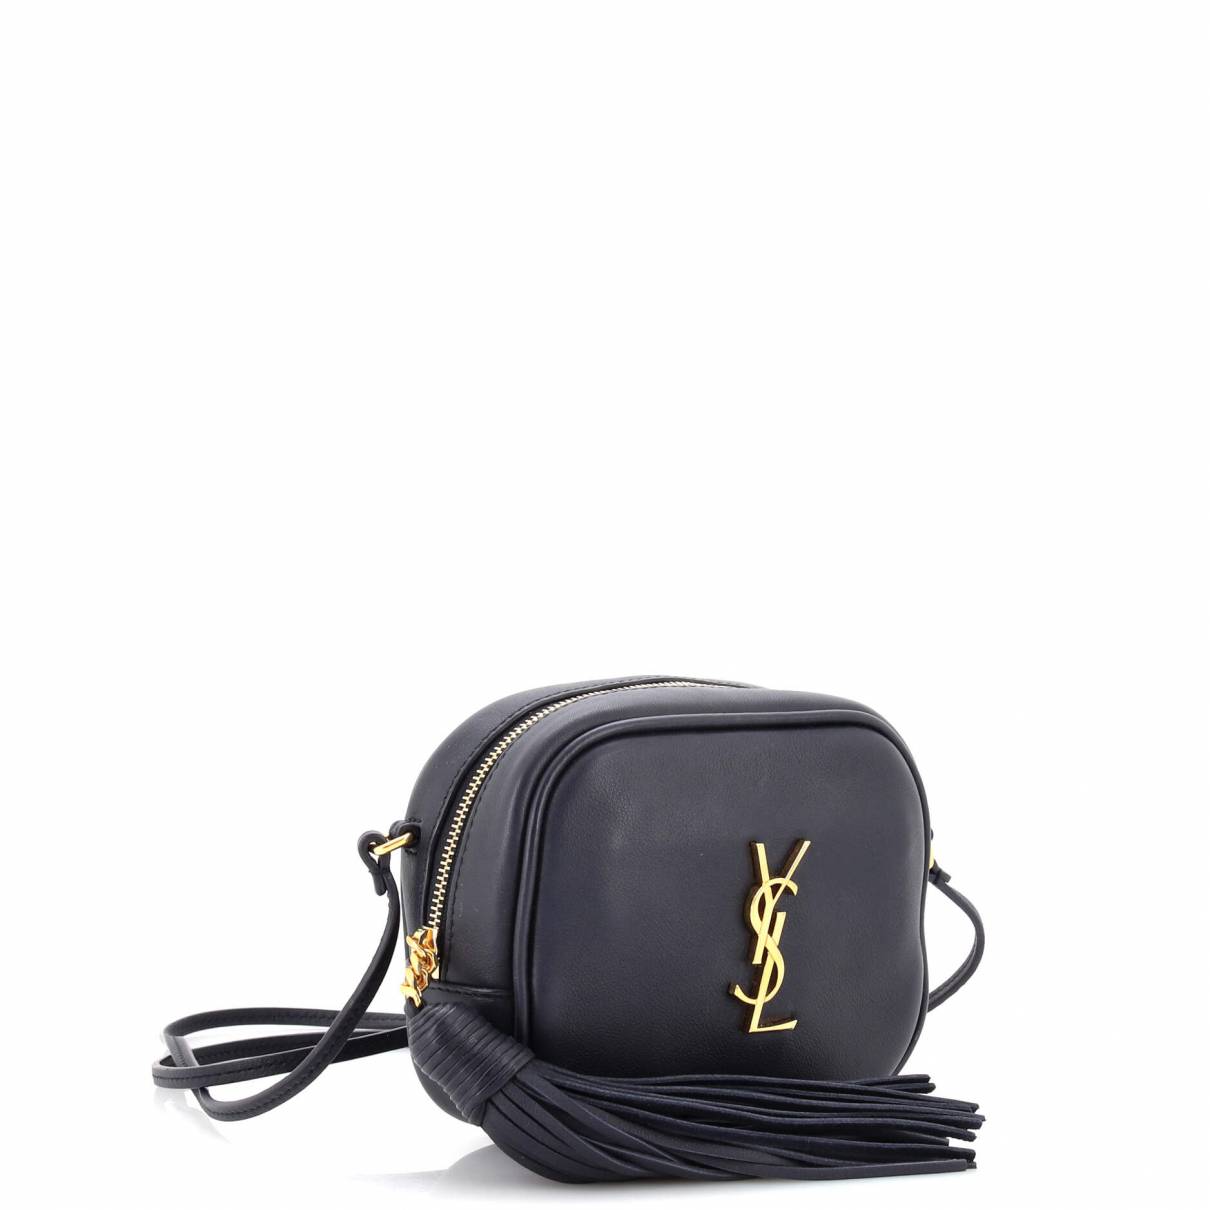 Buy Saint Laurent Leather handbag online